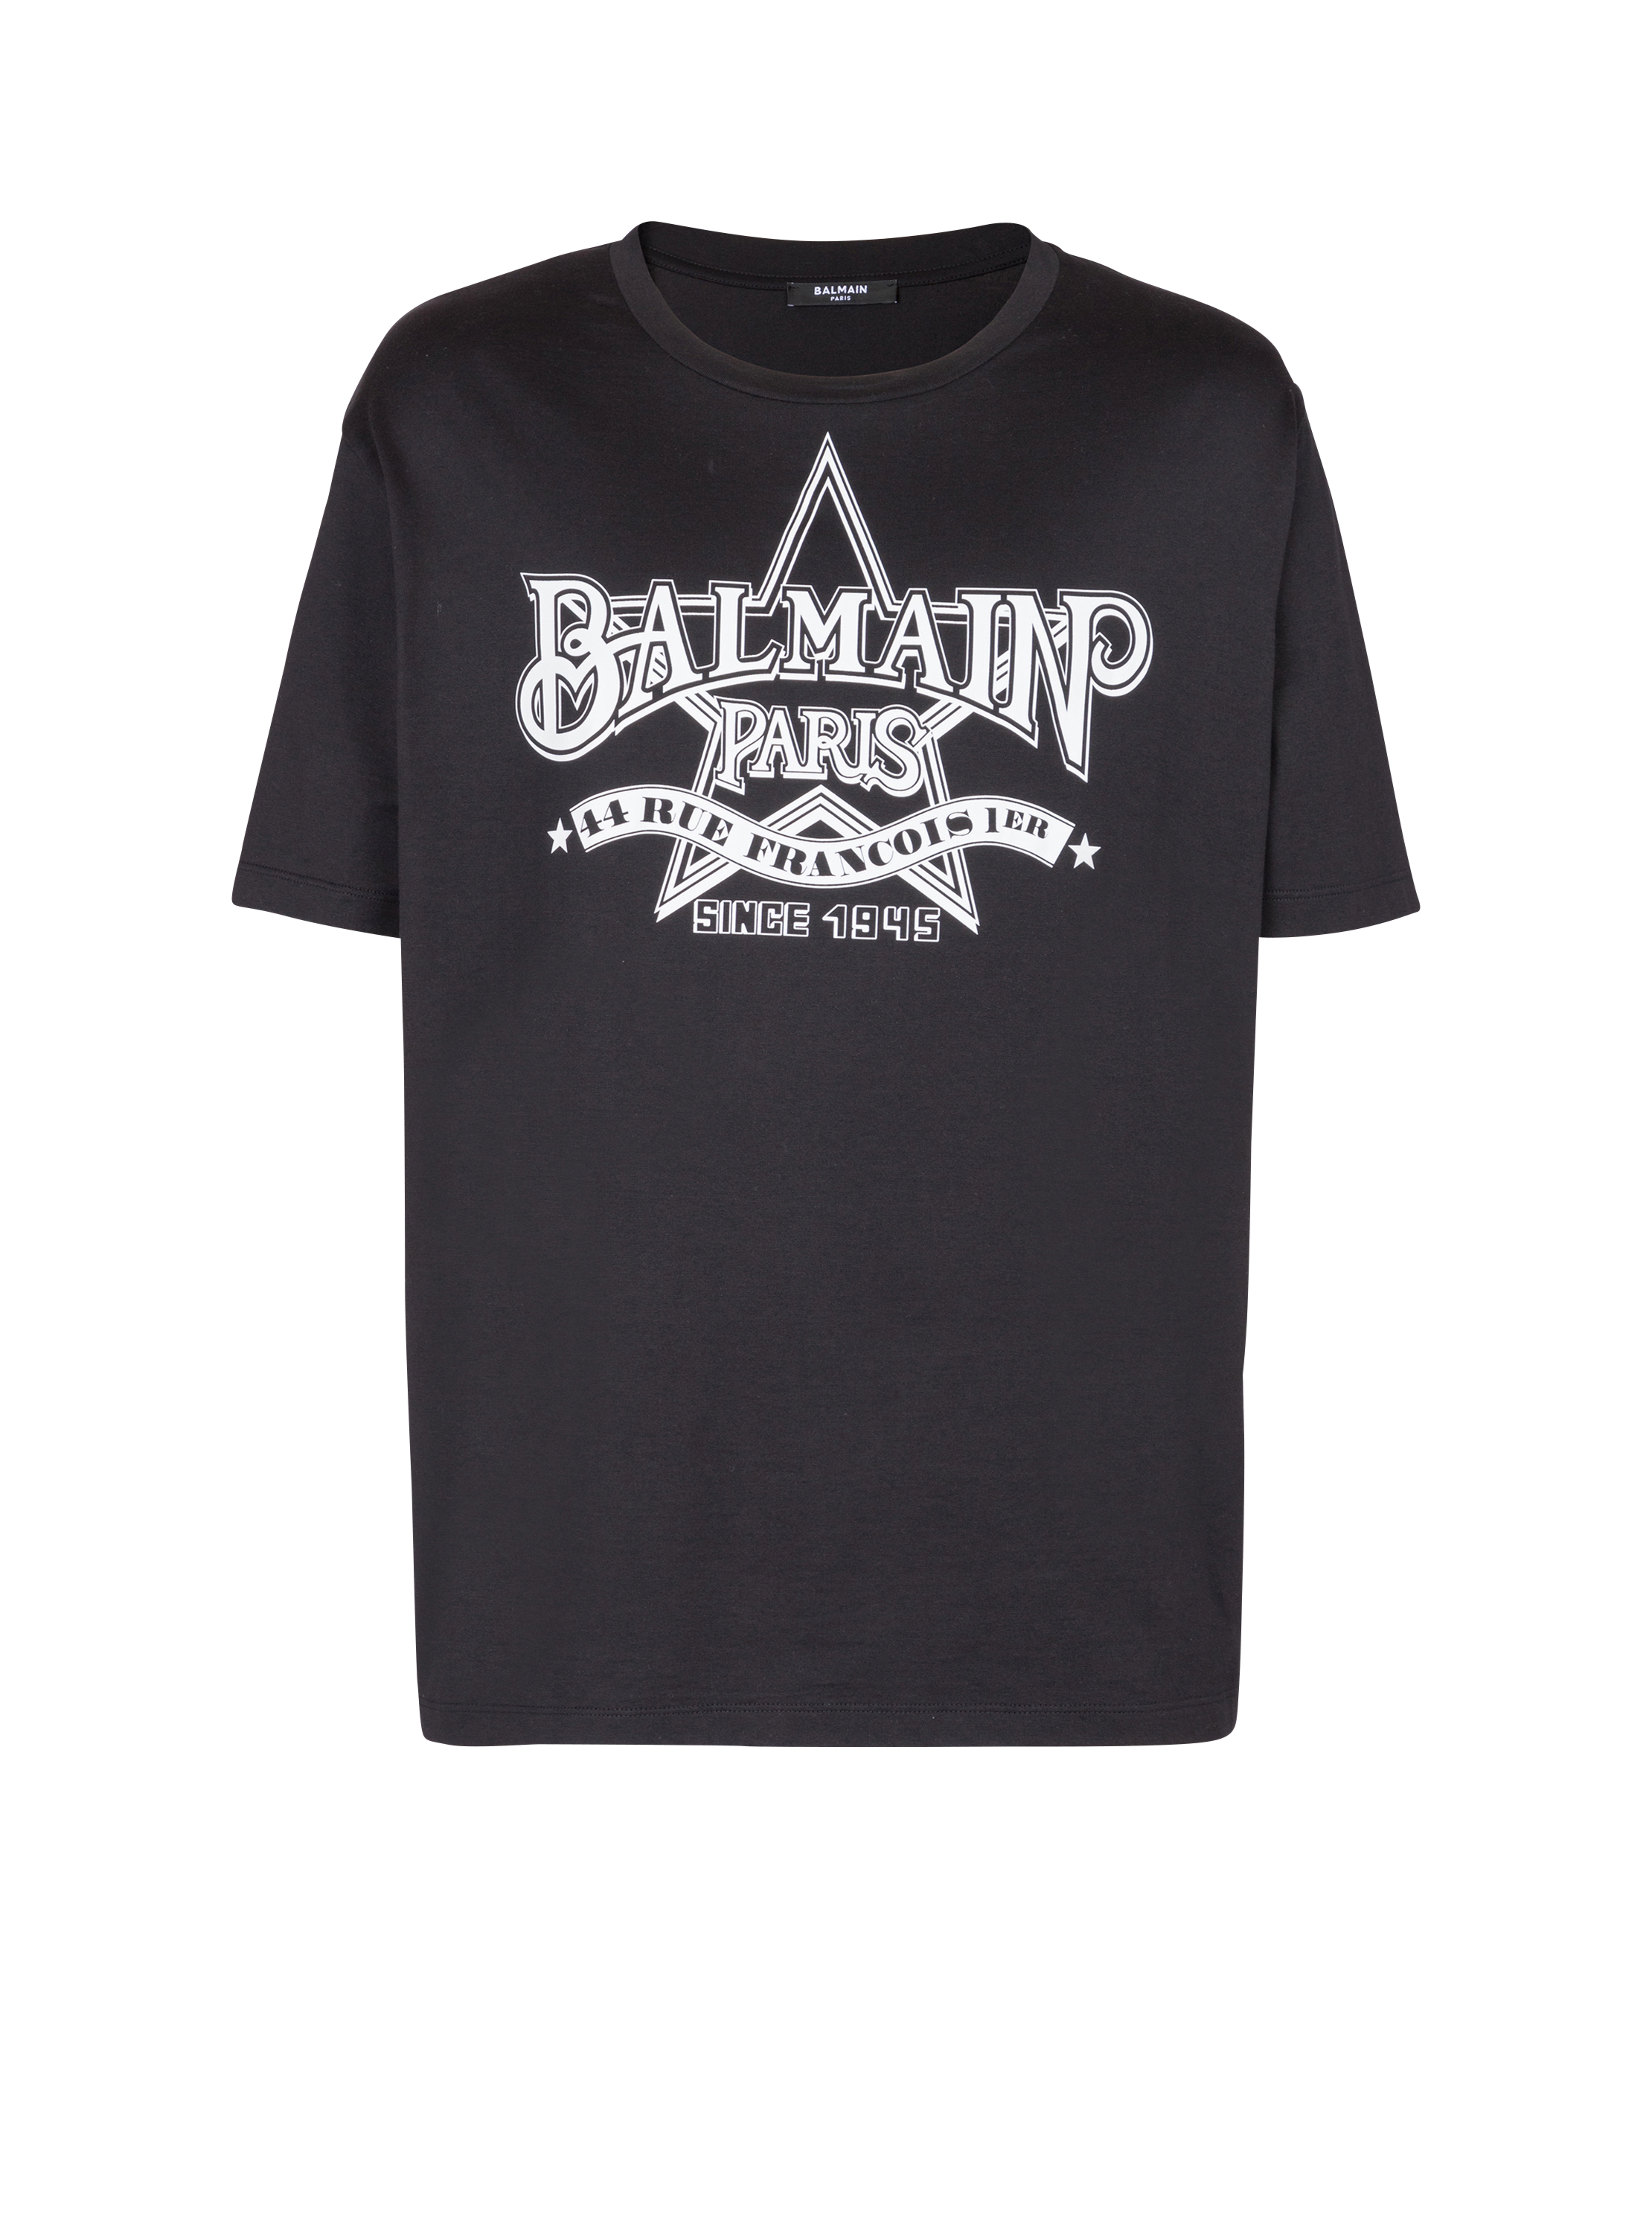 T-shirt Balmain stella